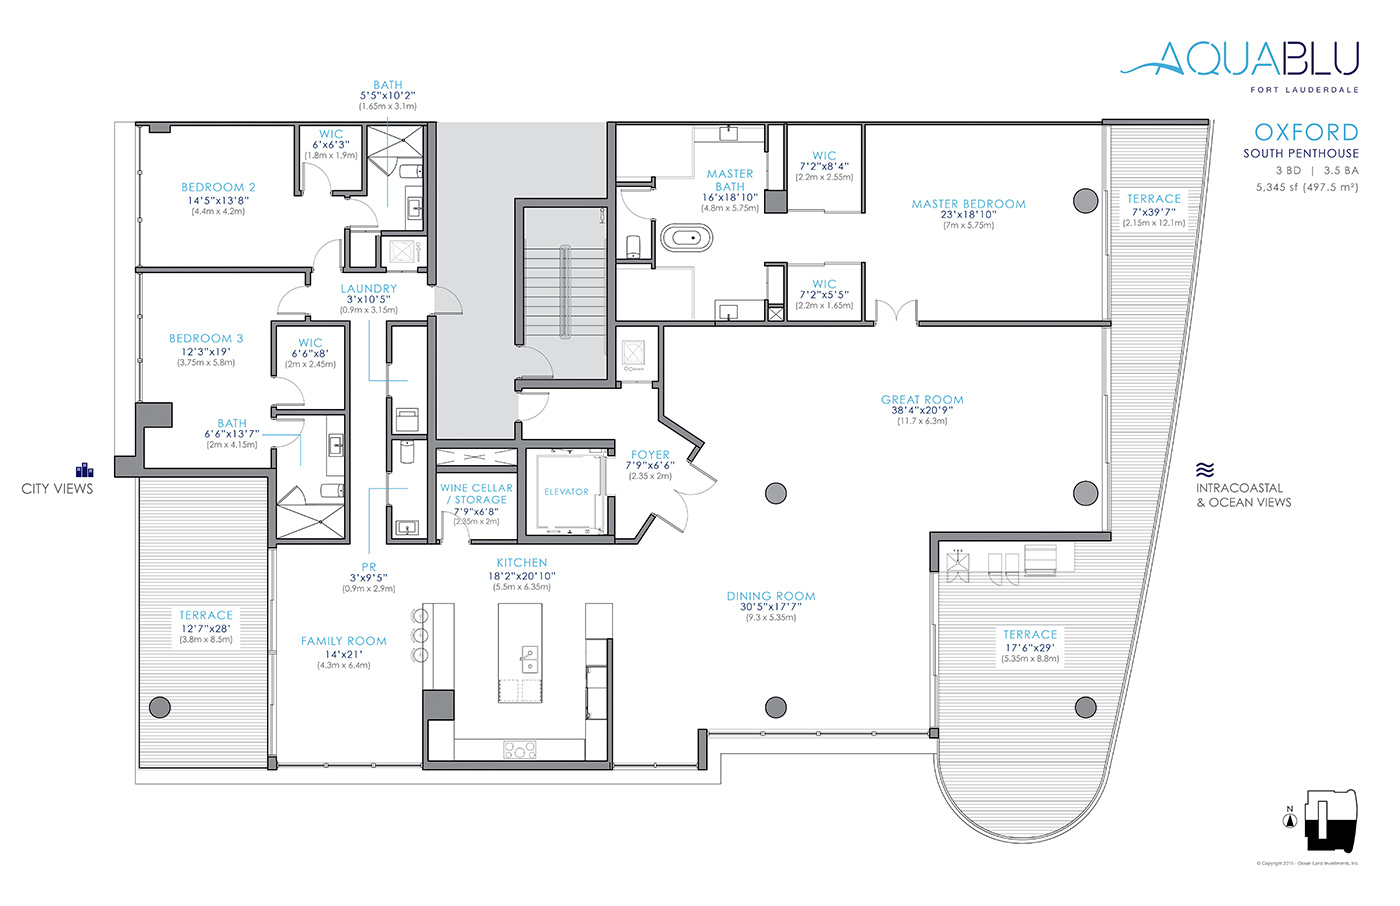 Floor Plan for AquaBlu Fort Lauderdale Floorplans, Oxford